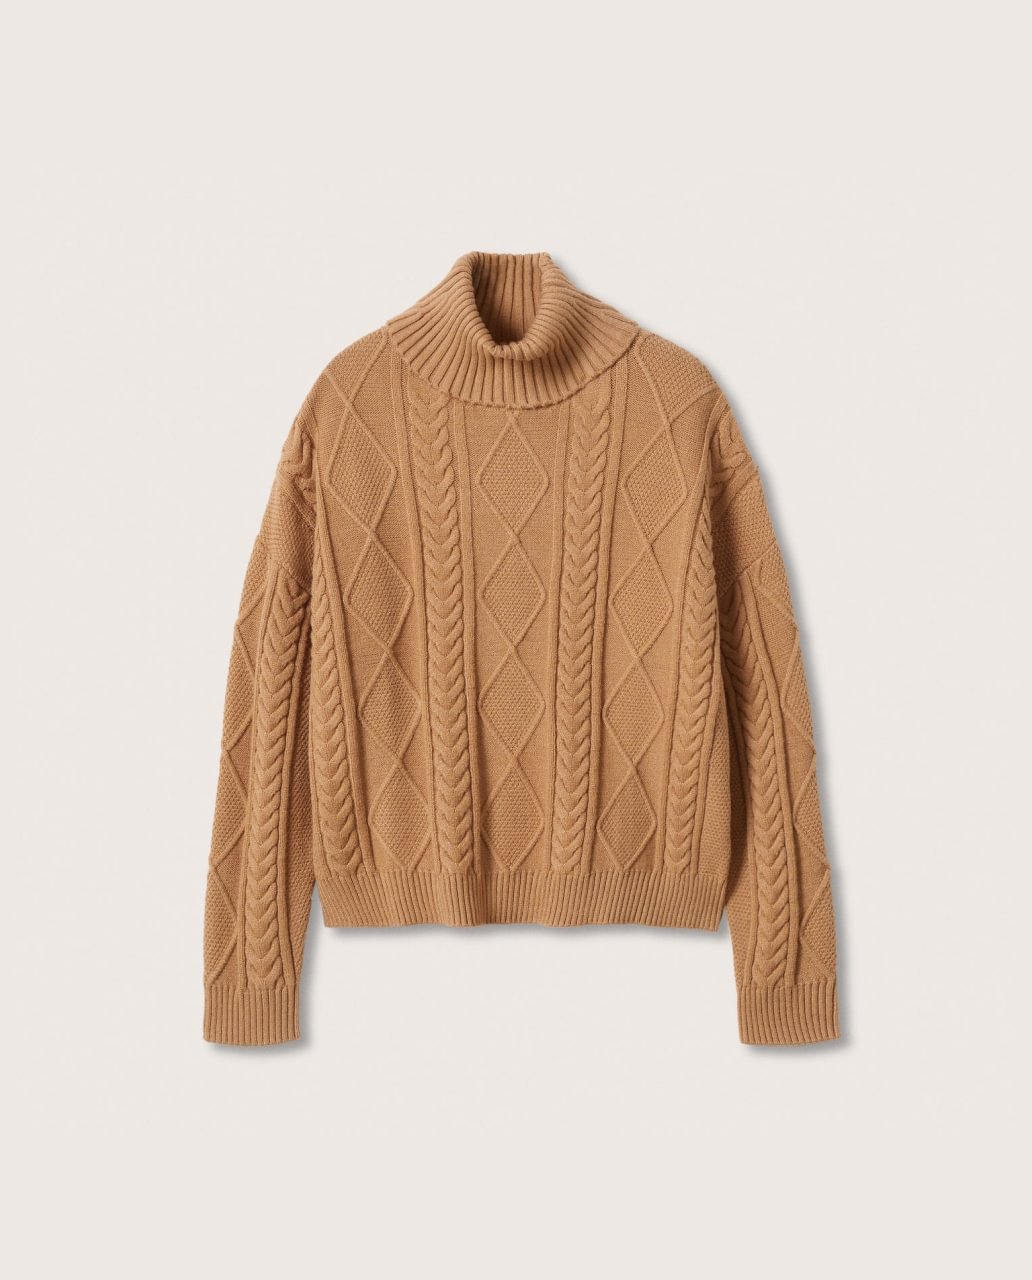 Herringbone knit sweater